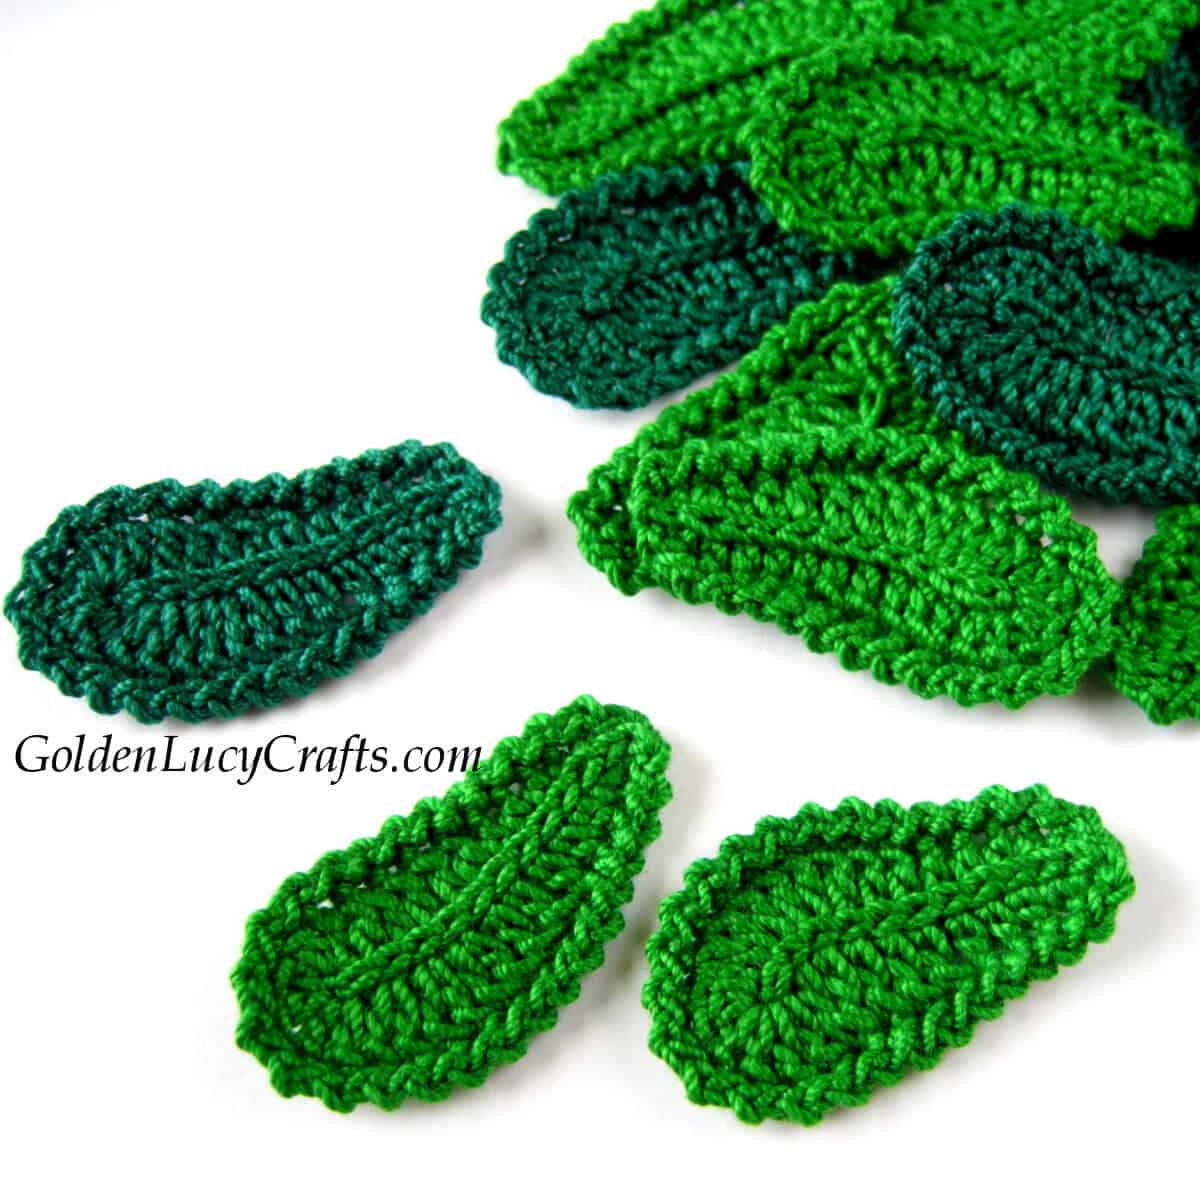 Crocheted green leaves.